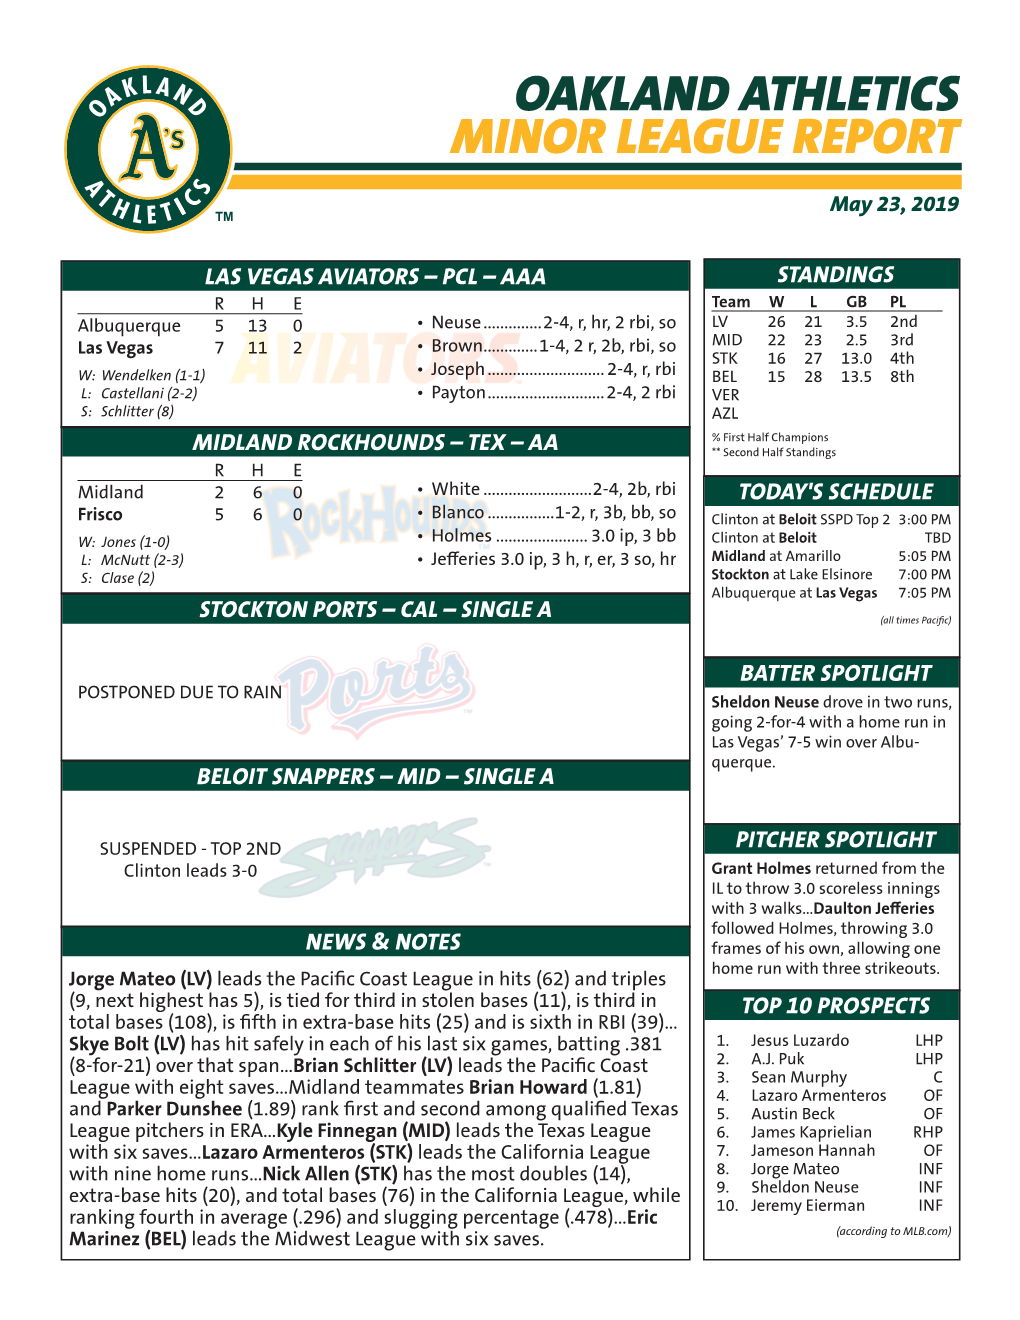 Oakland Athletics Minor League Report